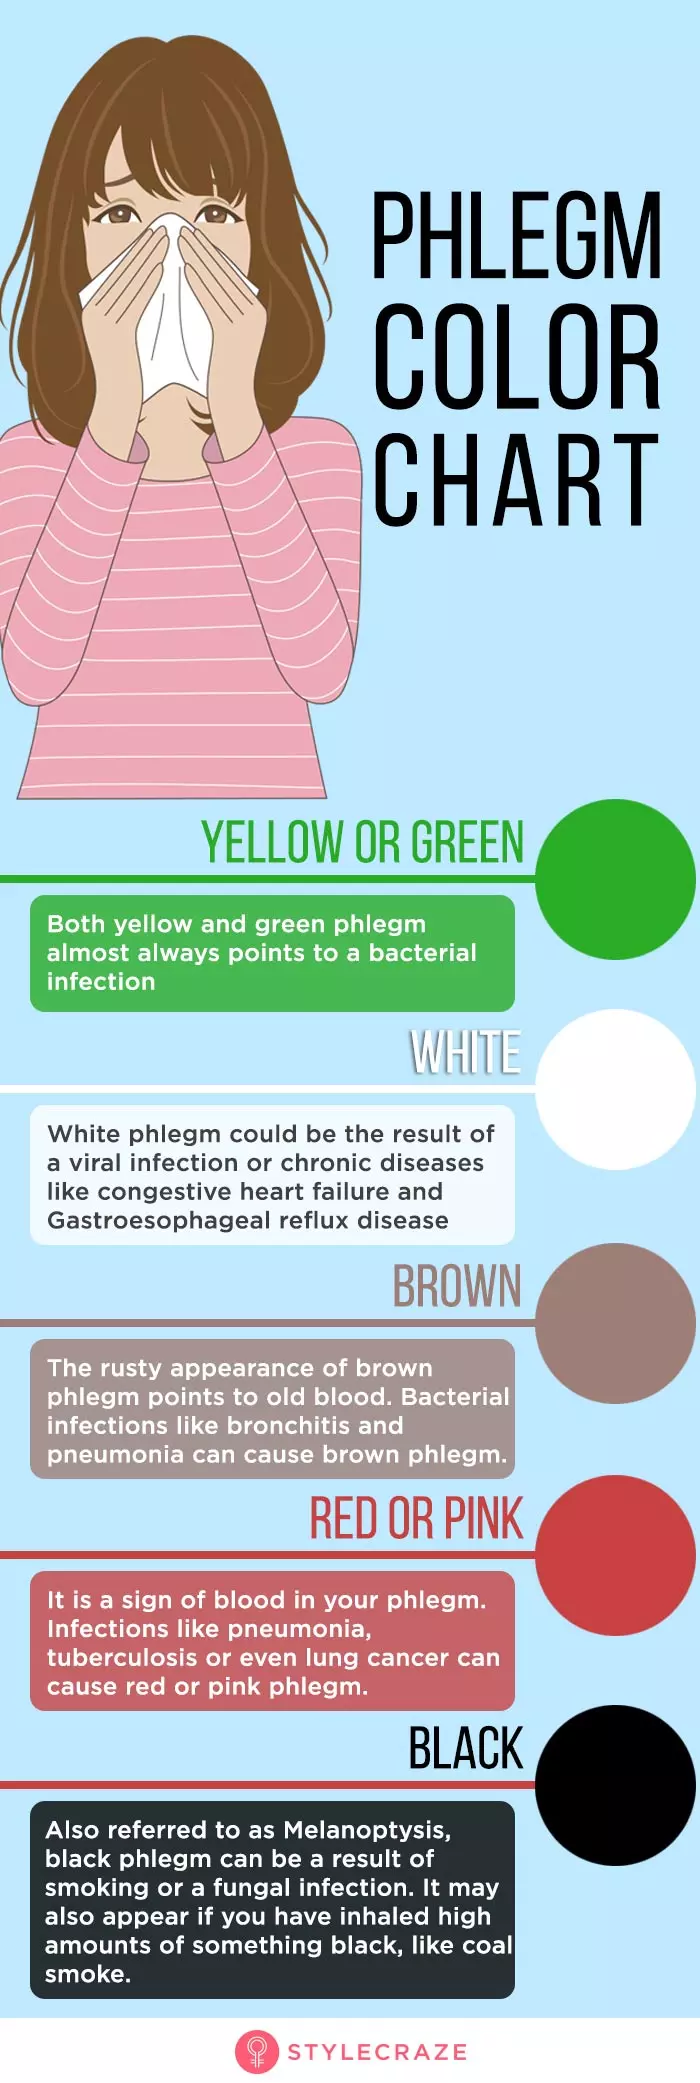 Phlegm color chart